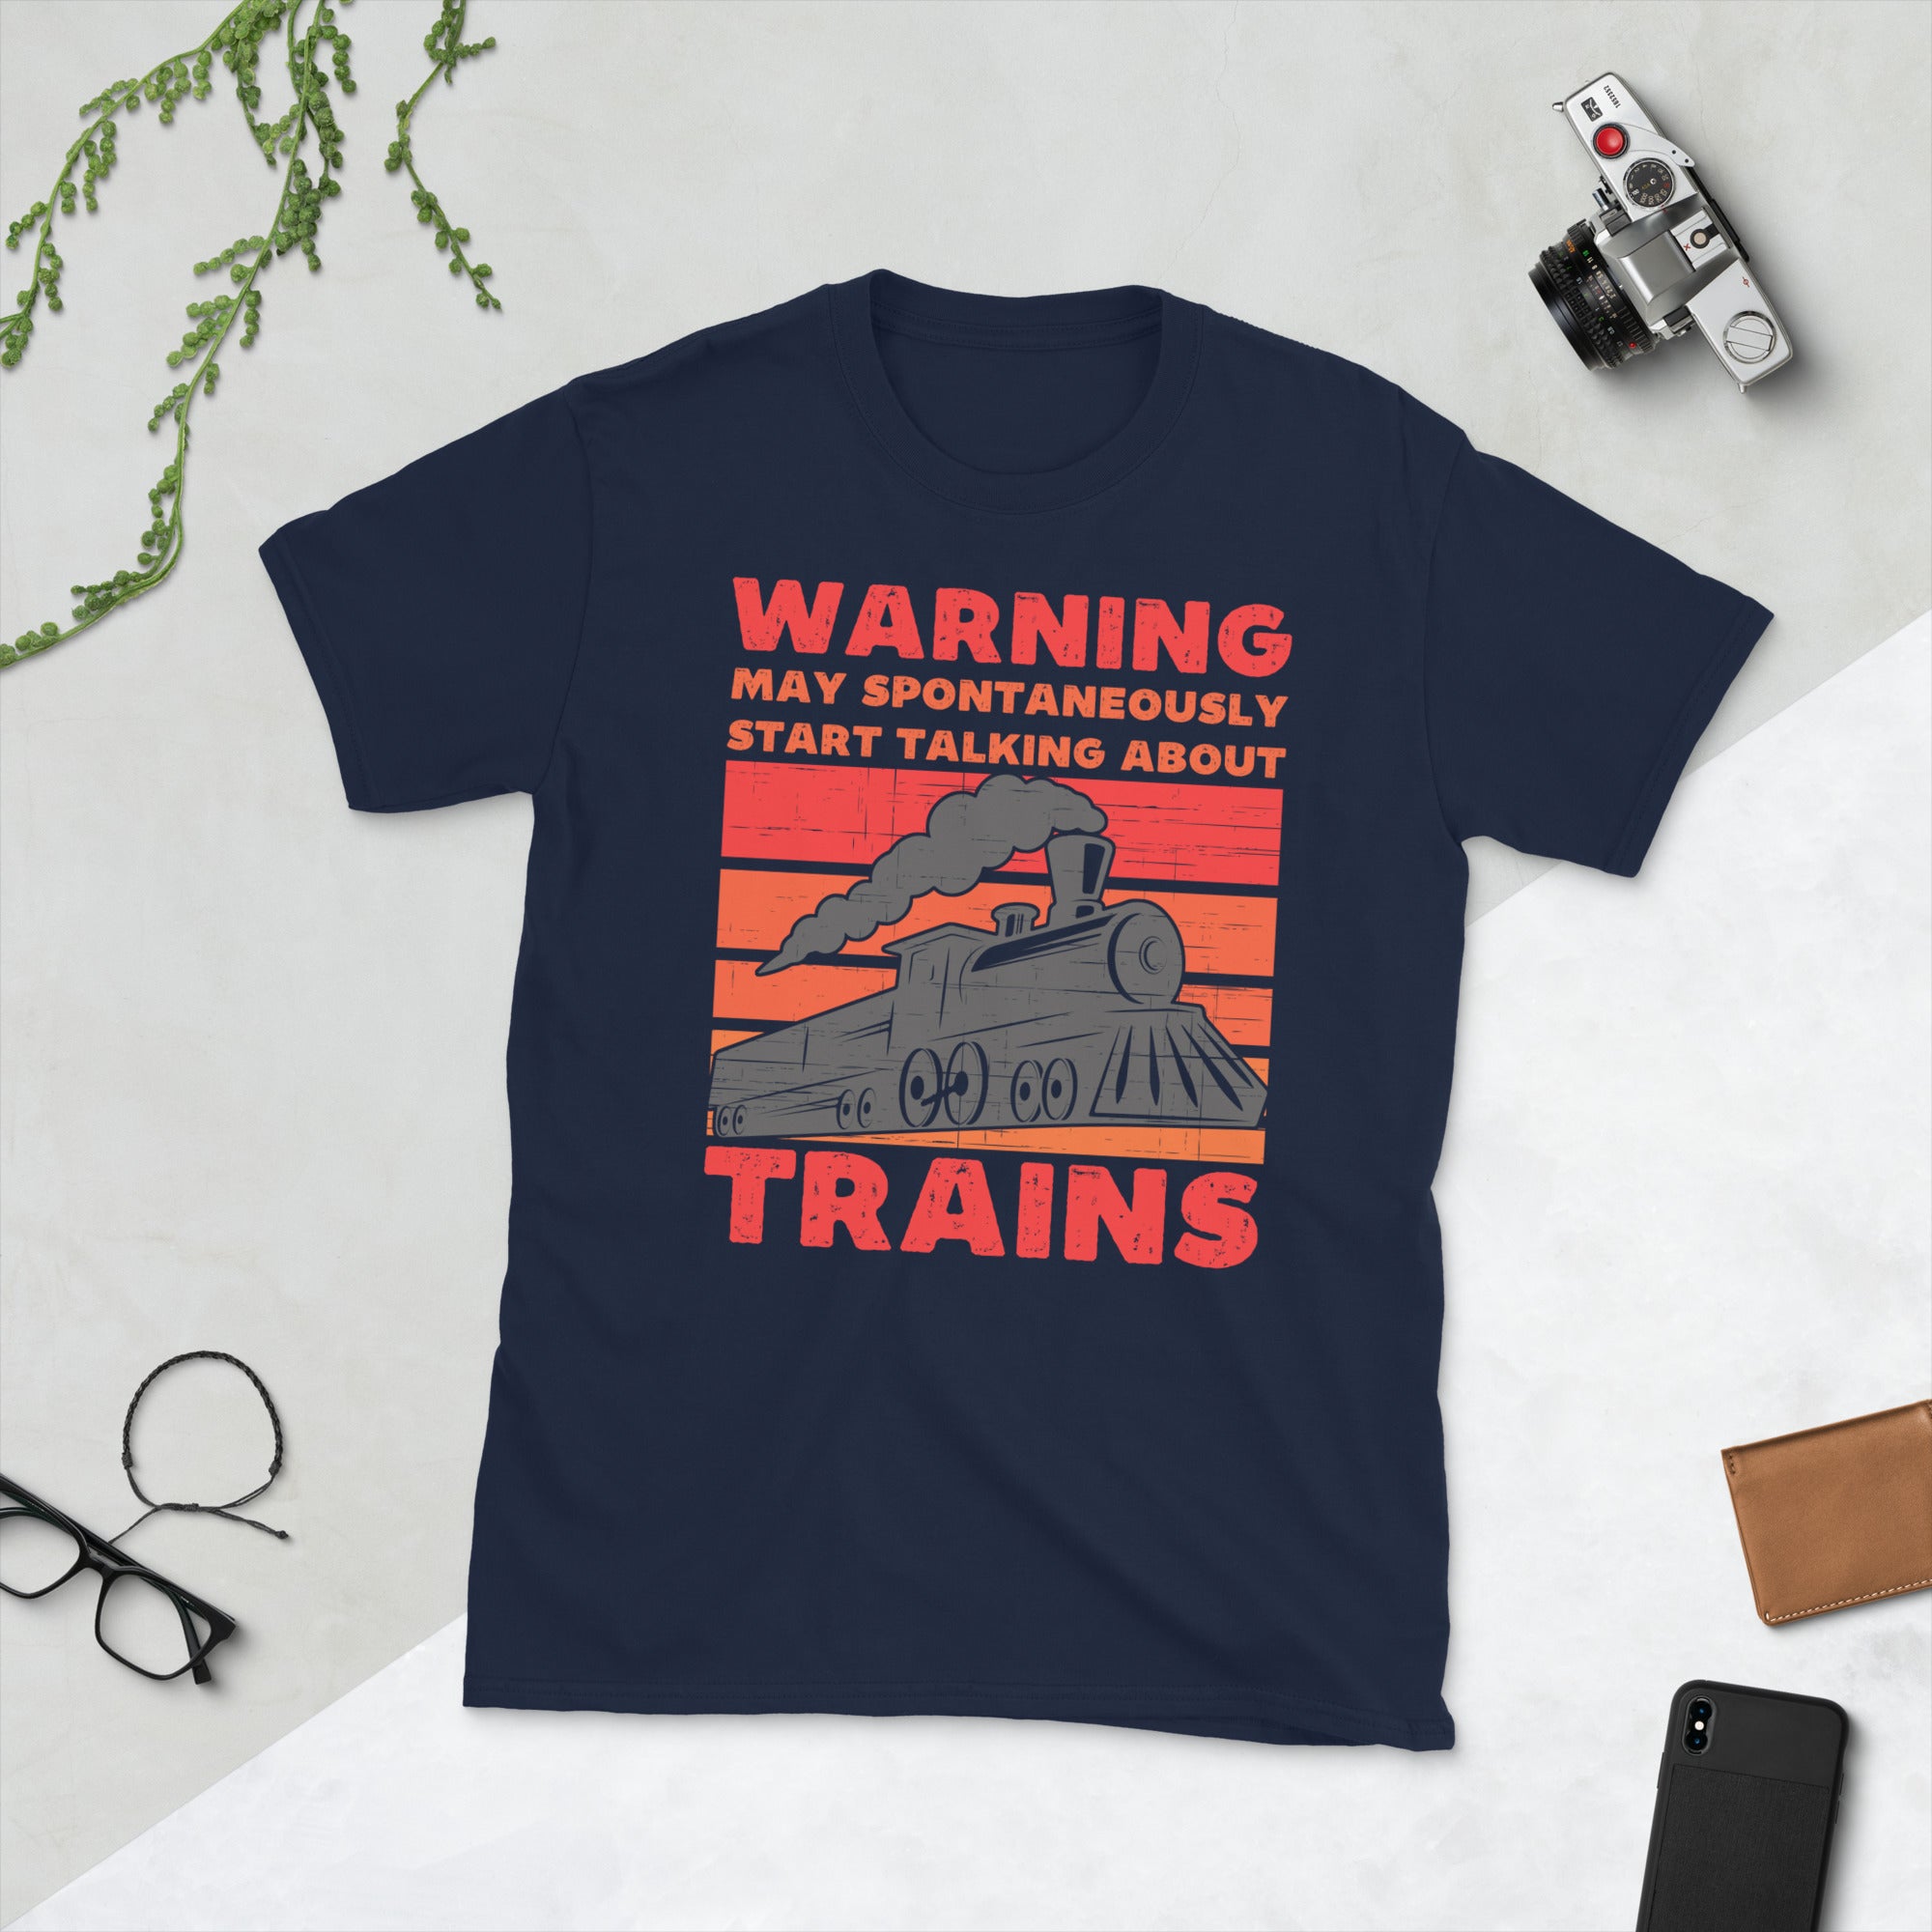 Warning May Spontaneously Start Talking About Trains, Train Engineer Shirt, Train Model Locomotive Gifts, Railroad Tshirt, Vintage Train Tee